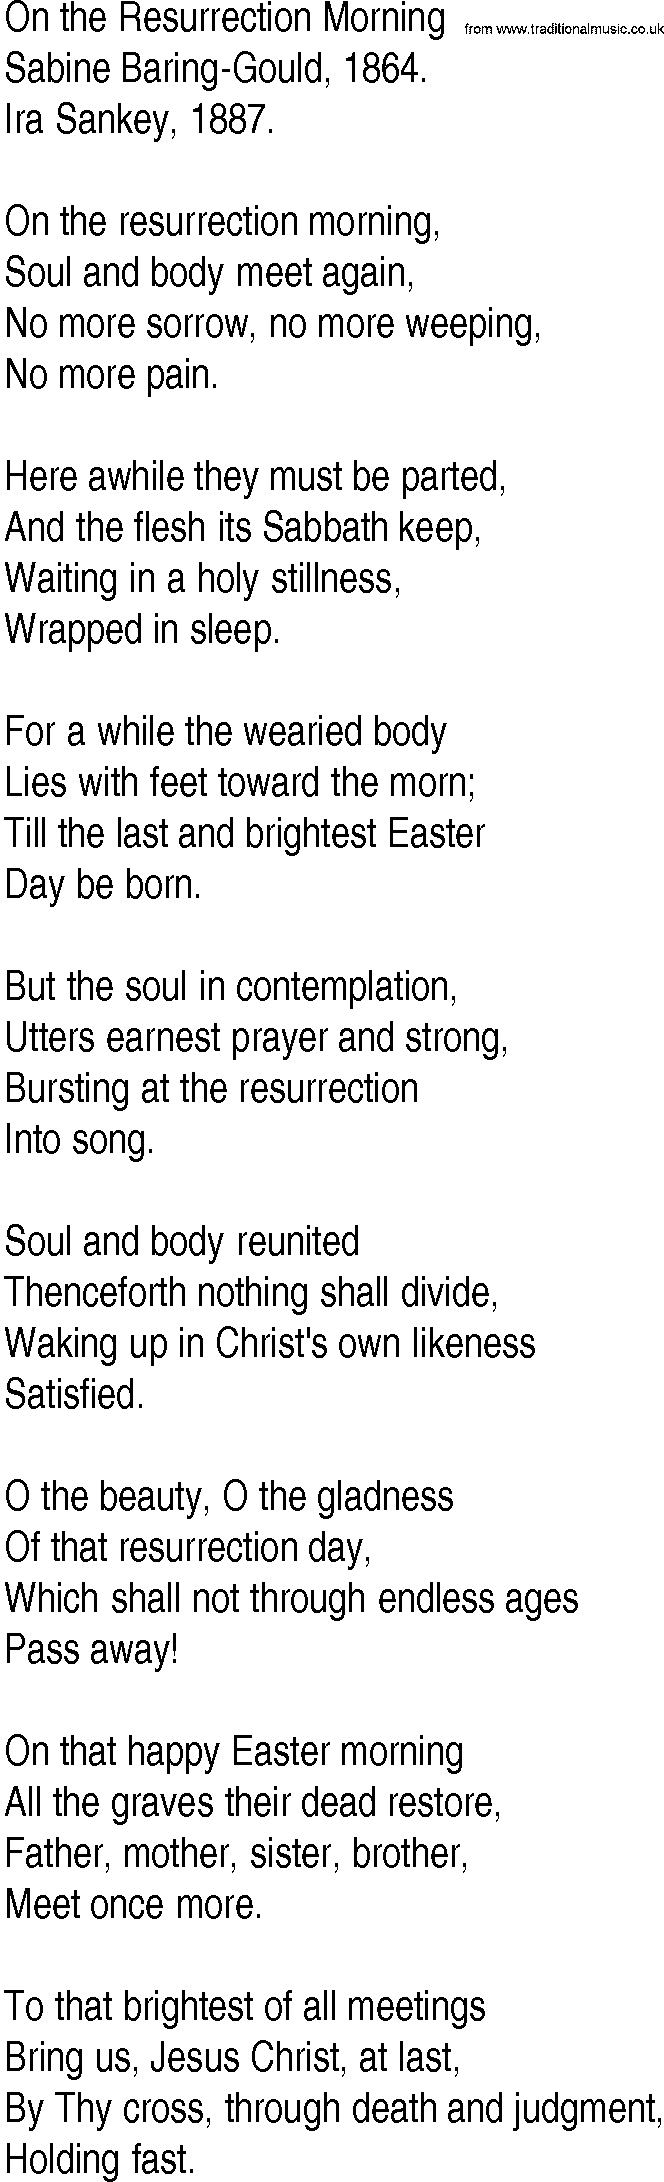 Hymn and Gospel Song: On the Resurrection Morning by Sabine BaringGould lyrics